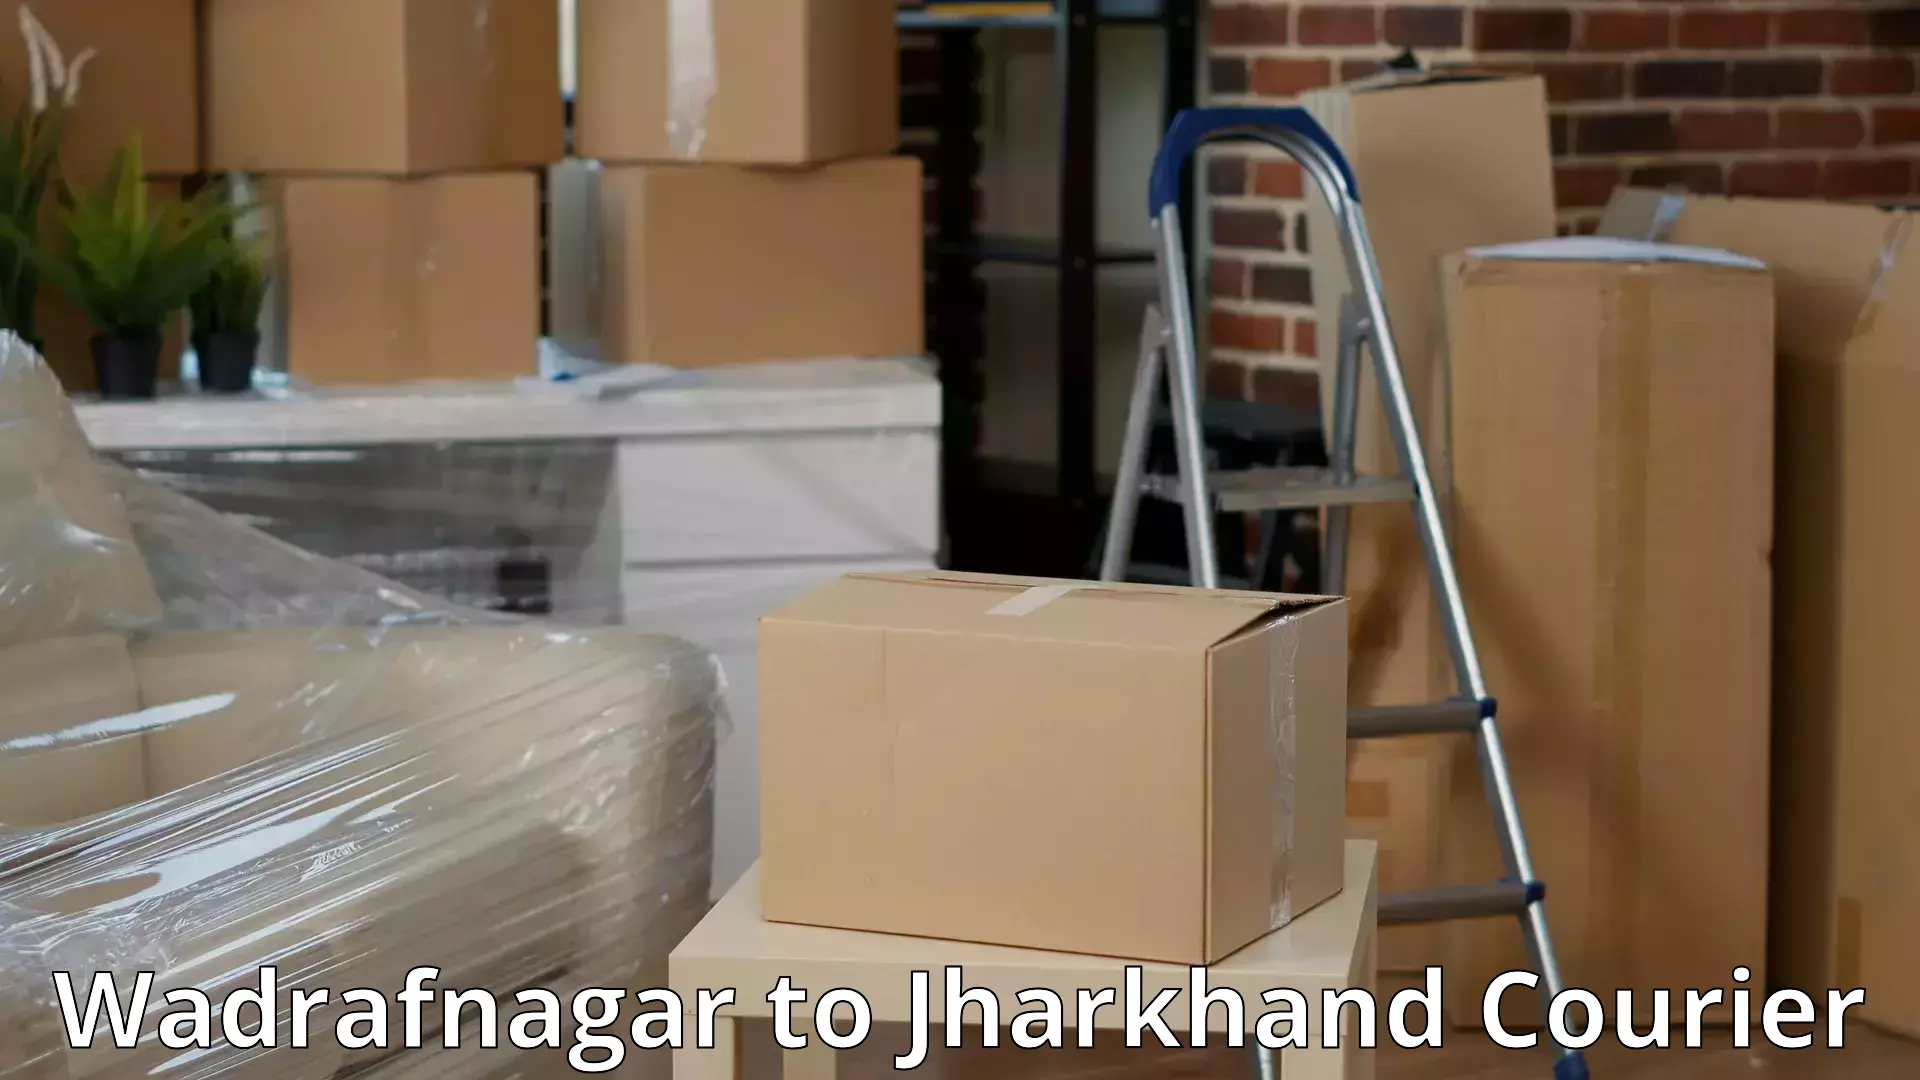 Residential moving experts Wadrafnagar to Daltonganj